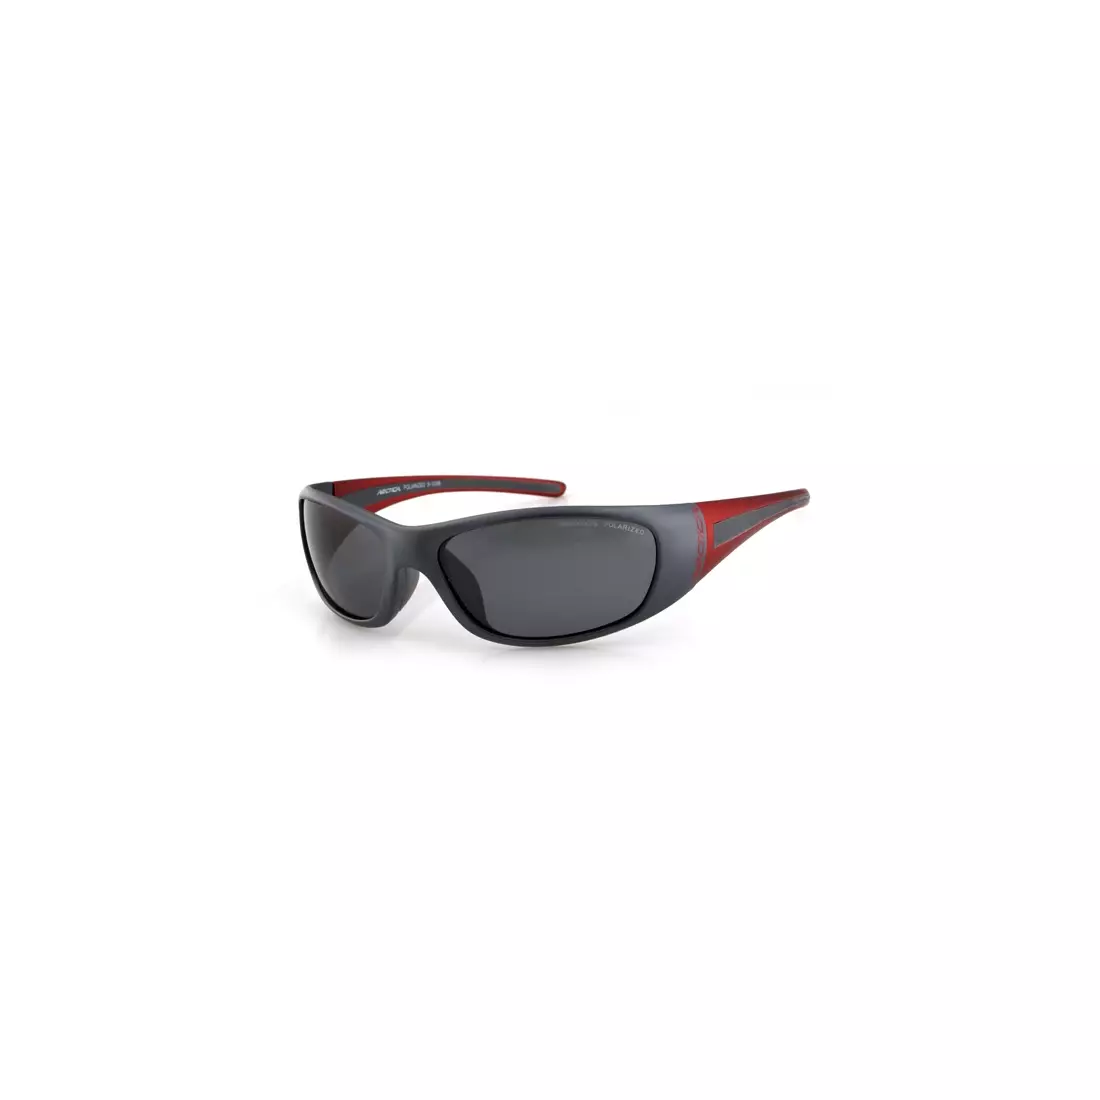 ARCTICA sports glasses S-103 B - color: Gray-red